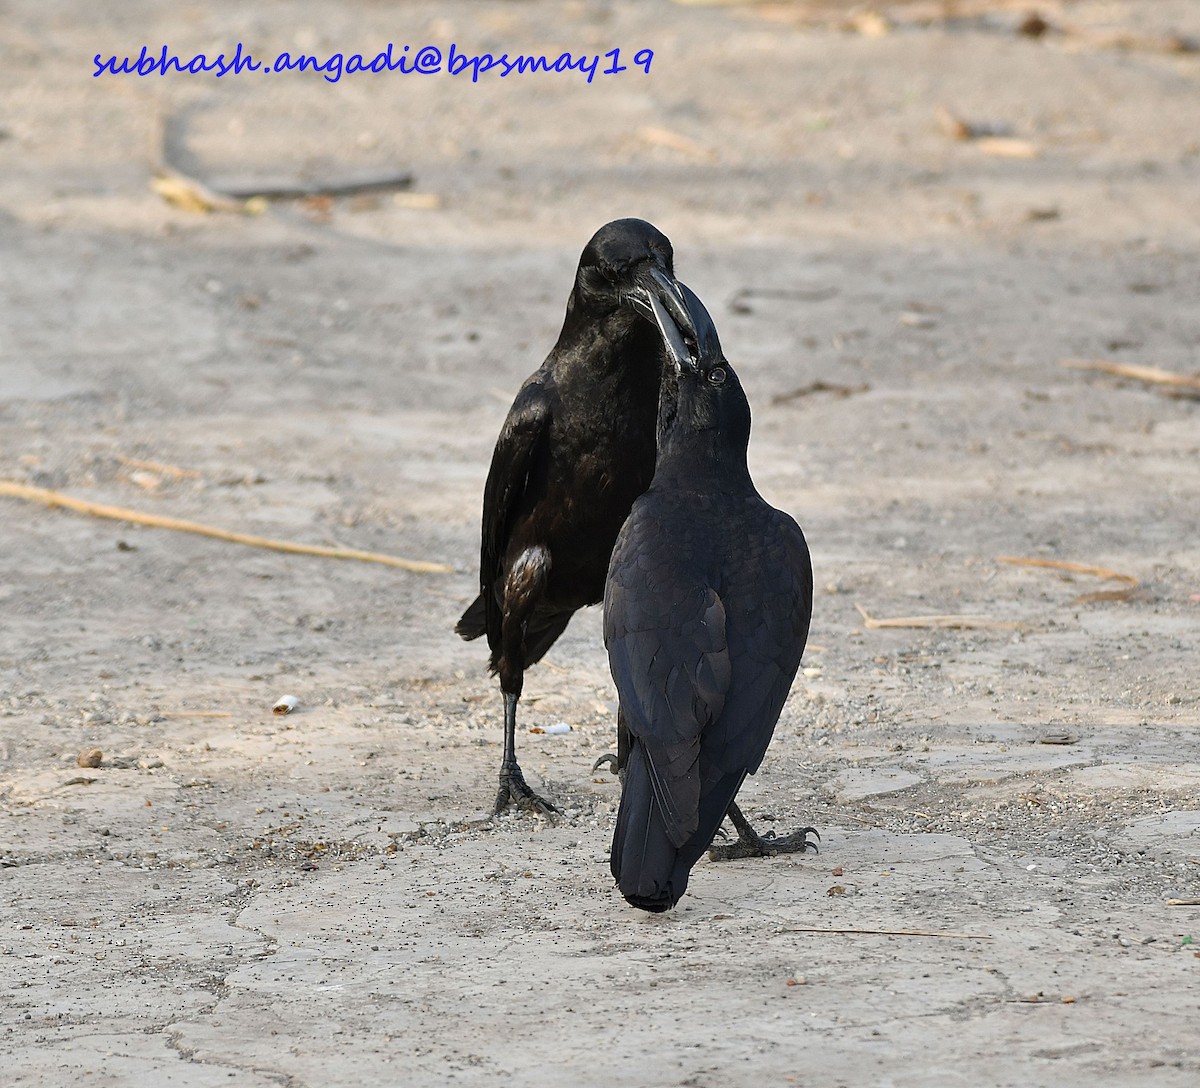 Large-billed Crow (Indian Jungle) - Subhash Angadi